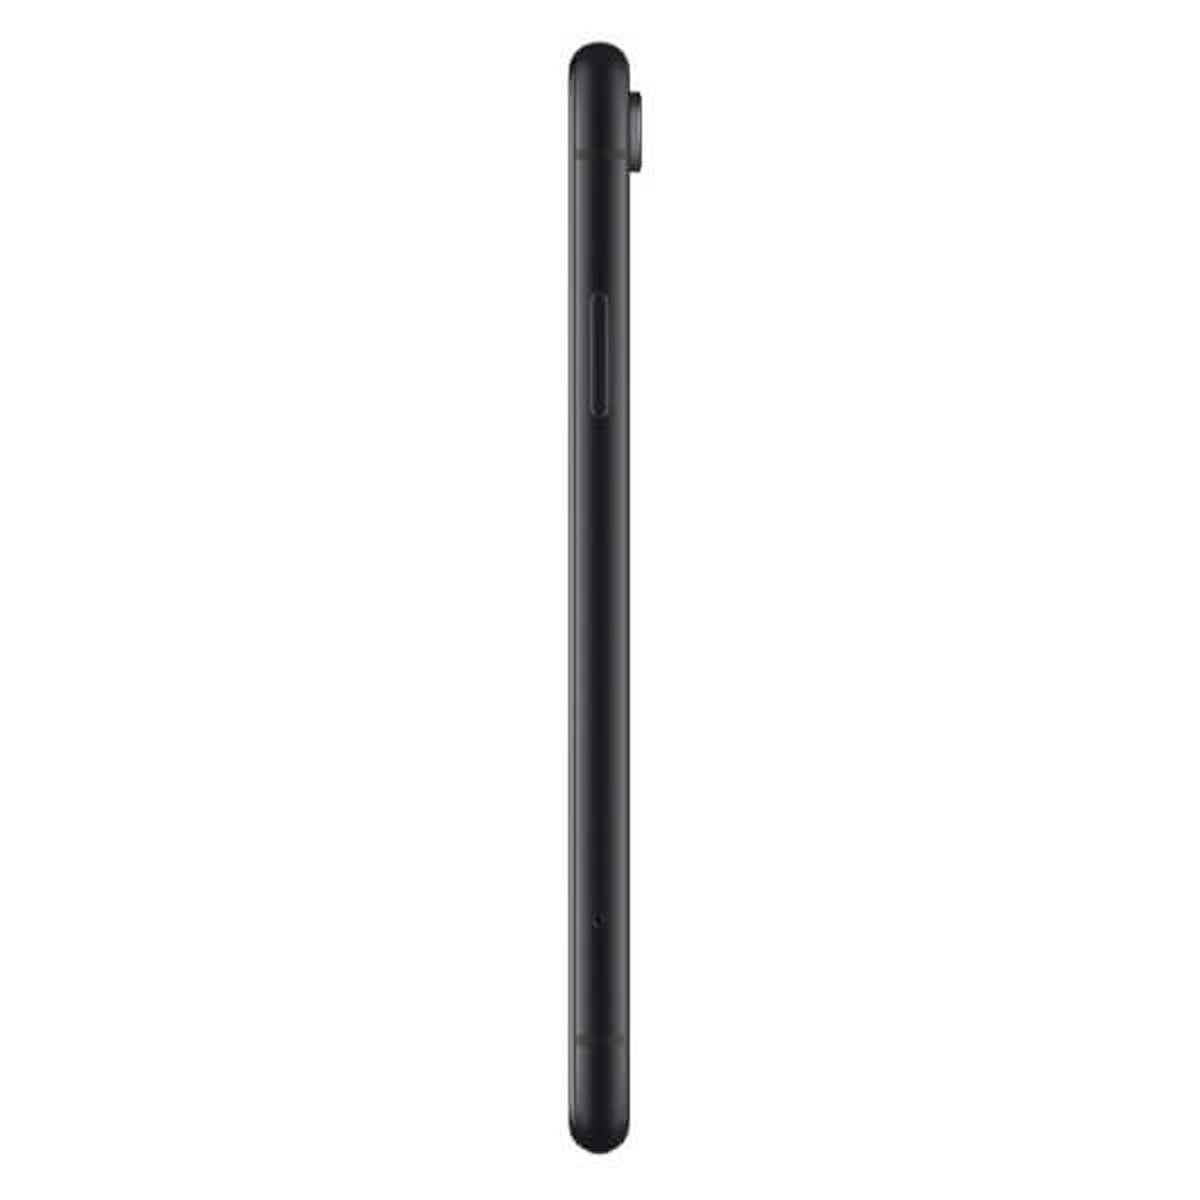 Apple iPhone XR 64 GB Black